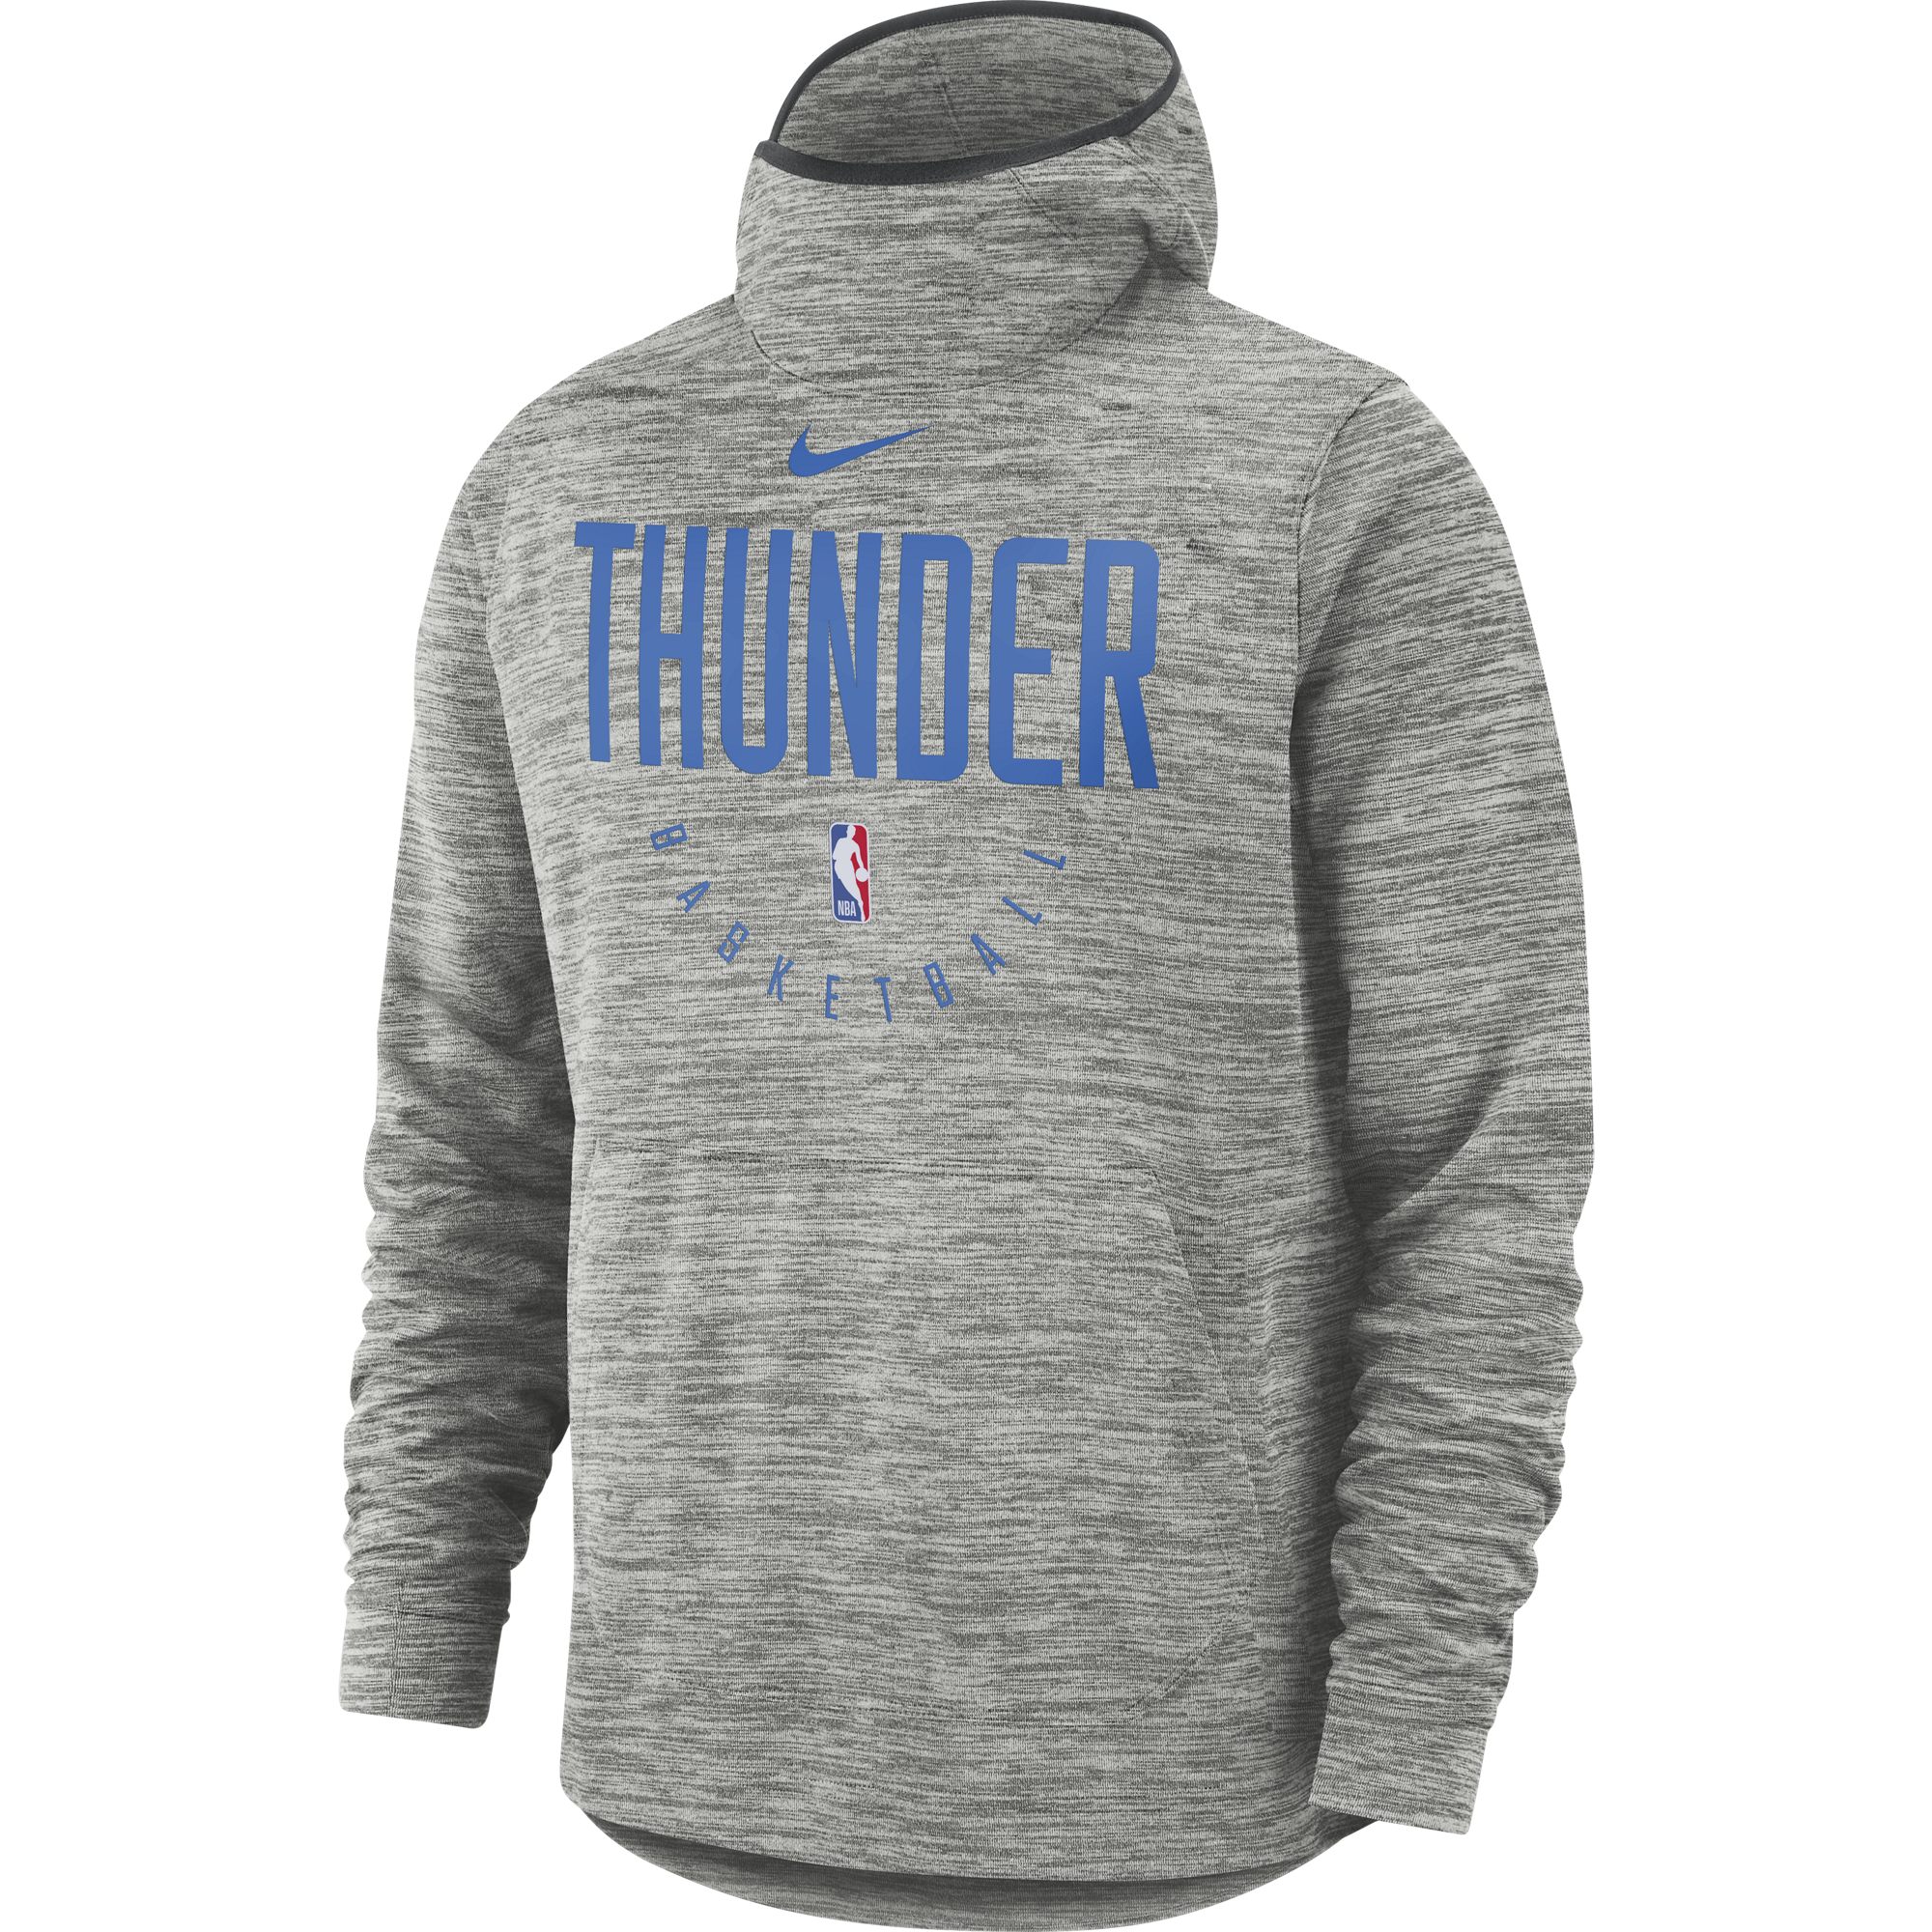 thunder hoodie nike